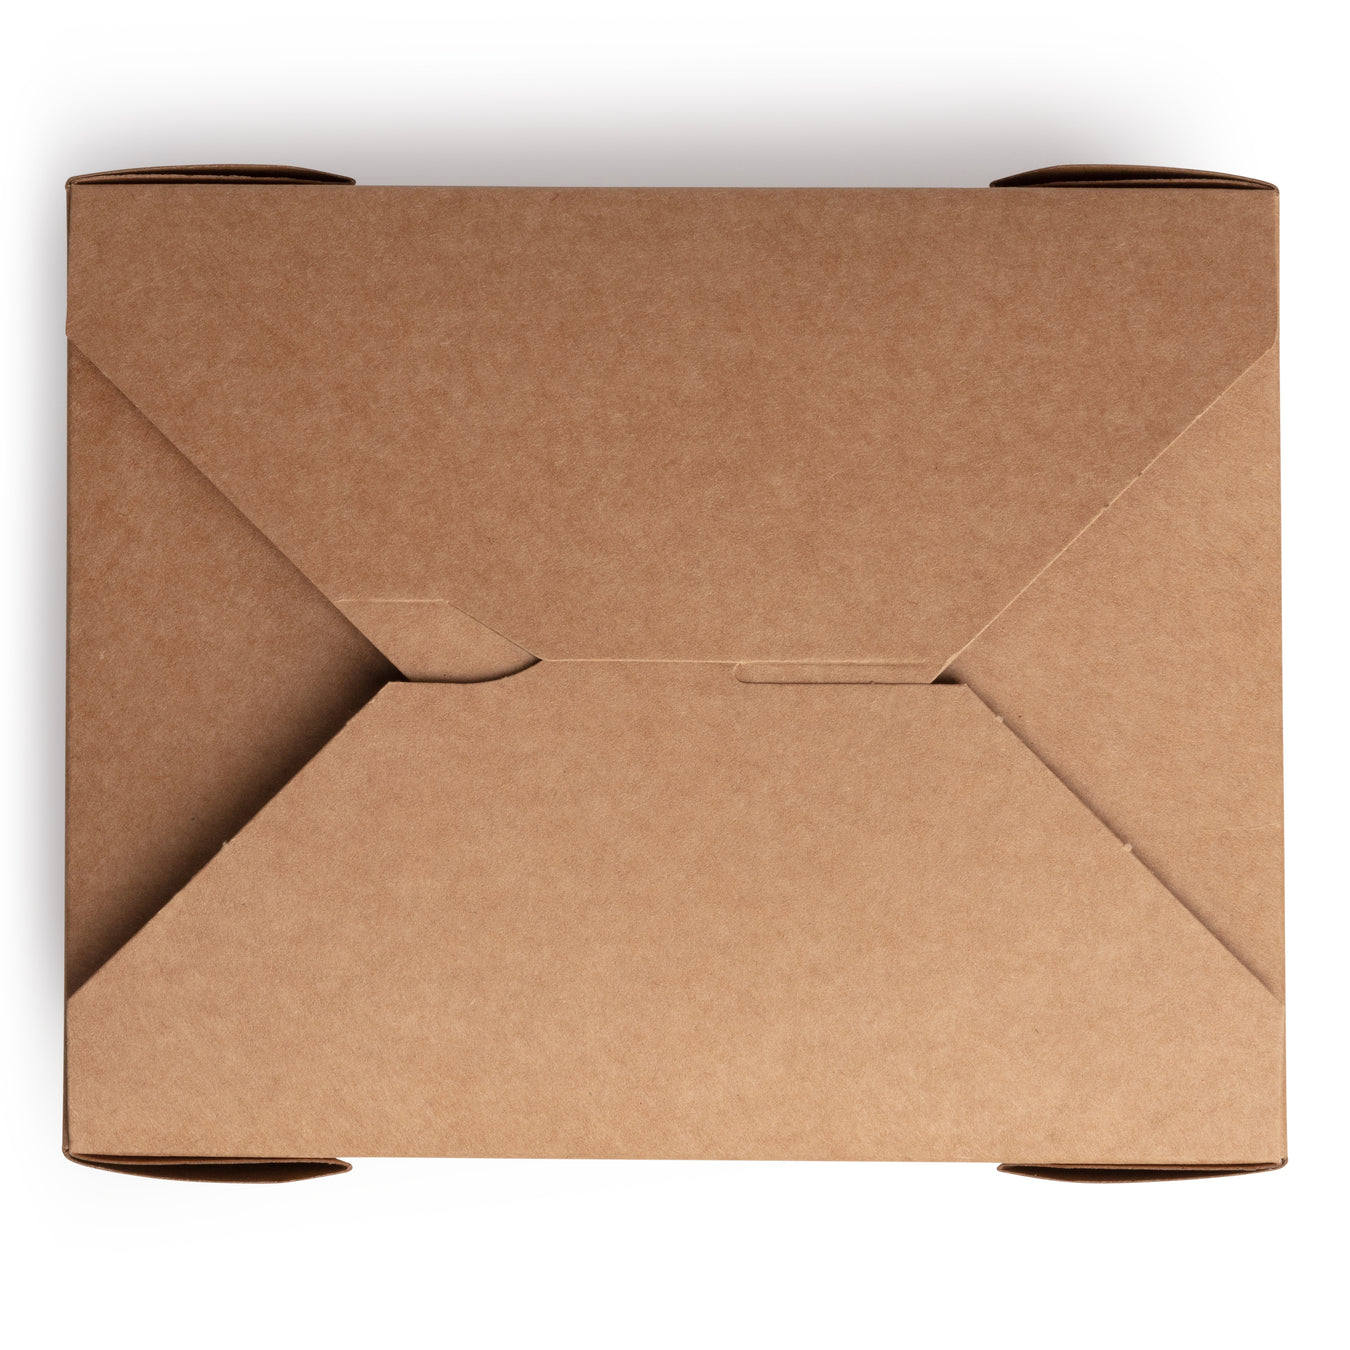 Deliveroo Packaging